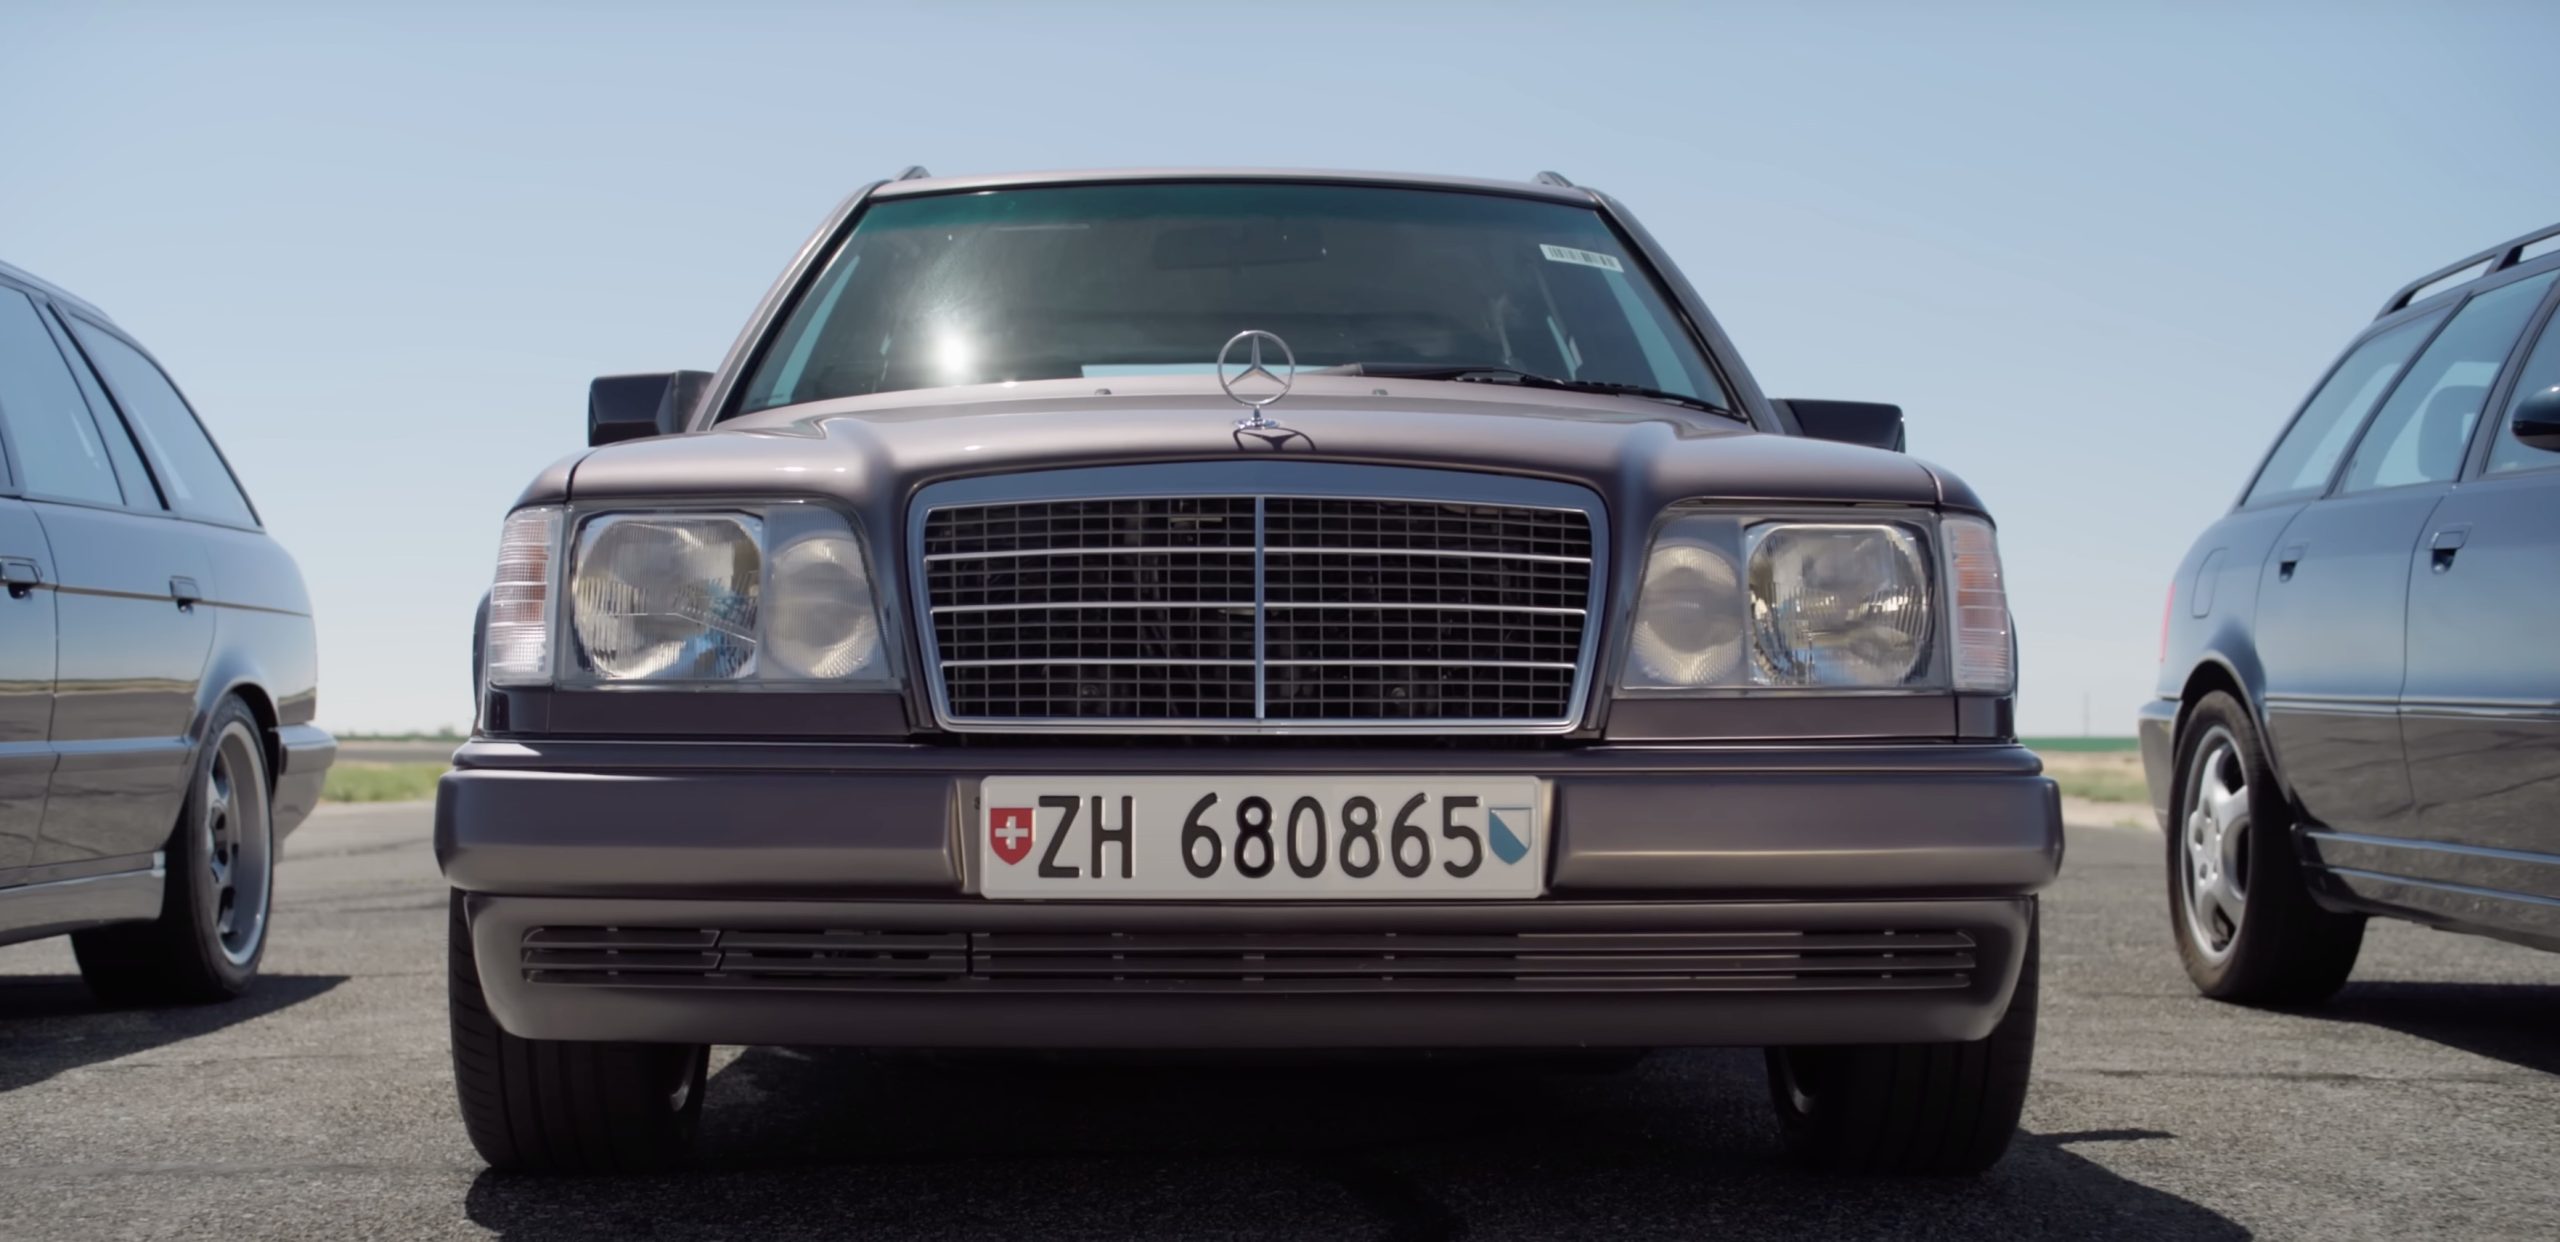 The W124 Mercedes 500E was the world's most perfect sedan